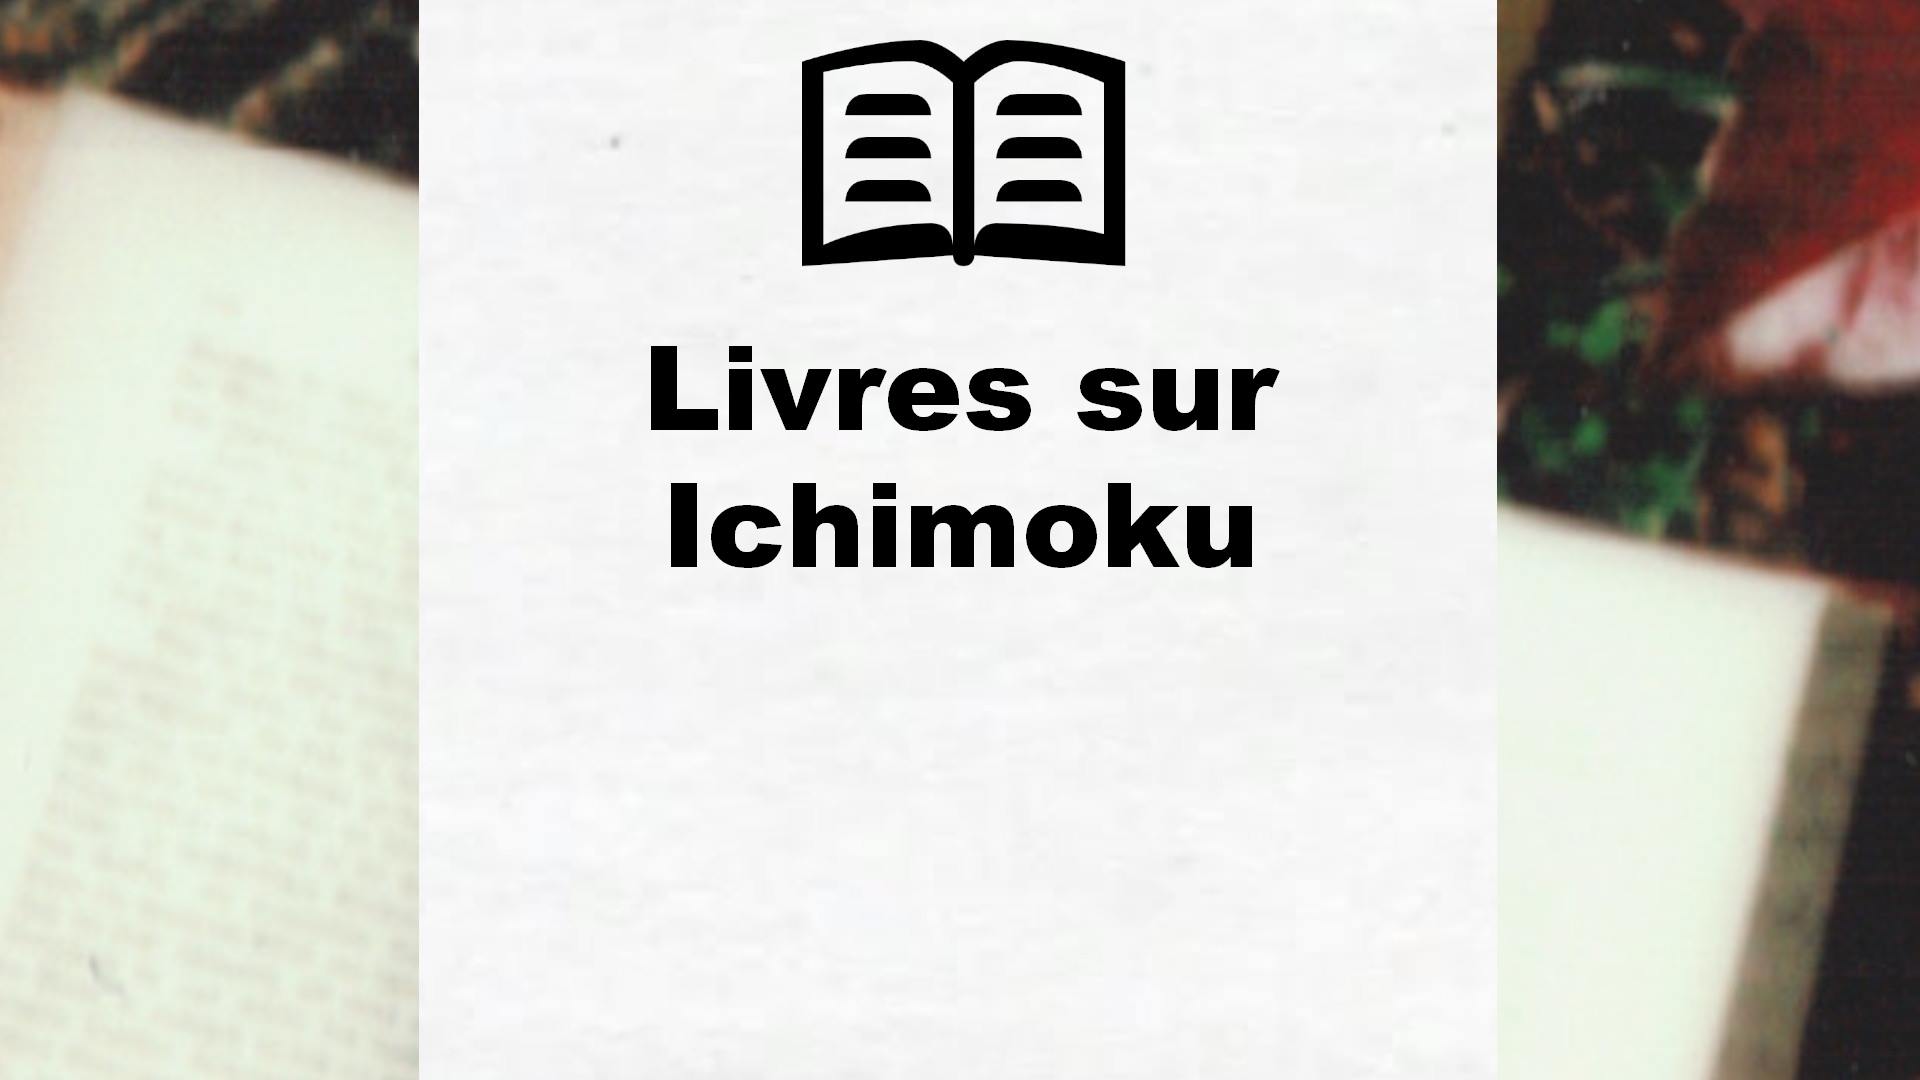 Livres sur Ichimoku